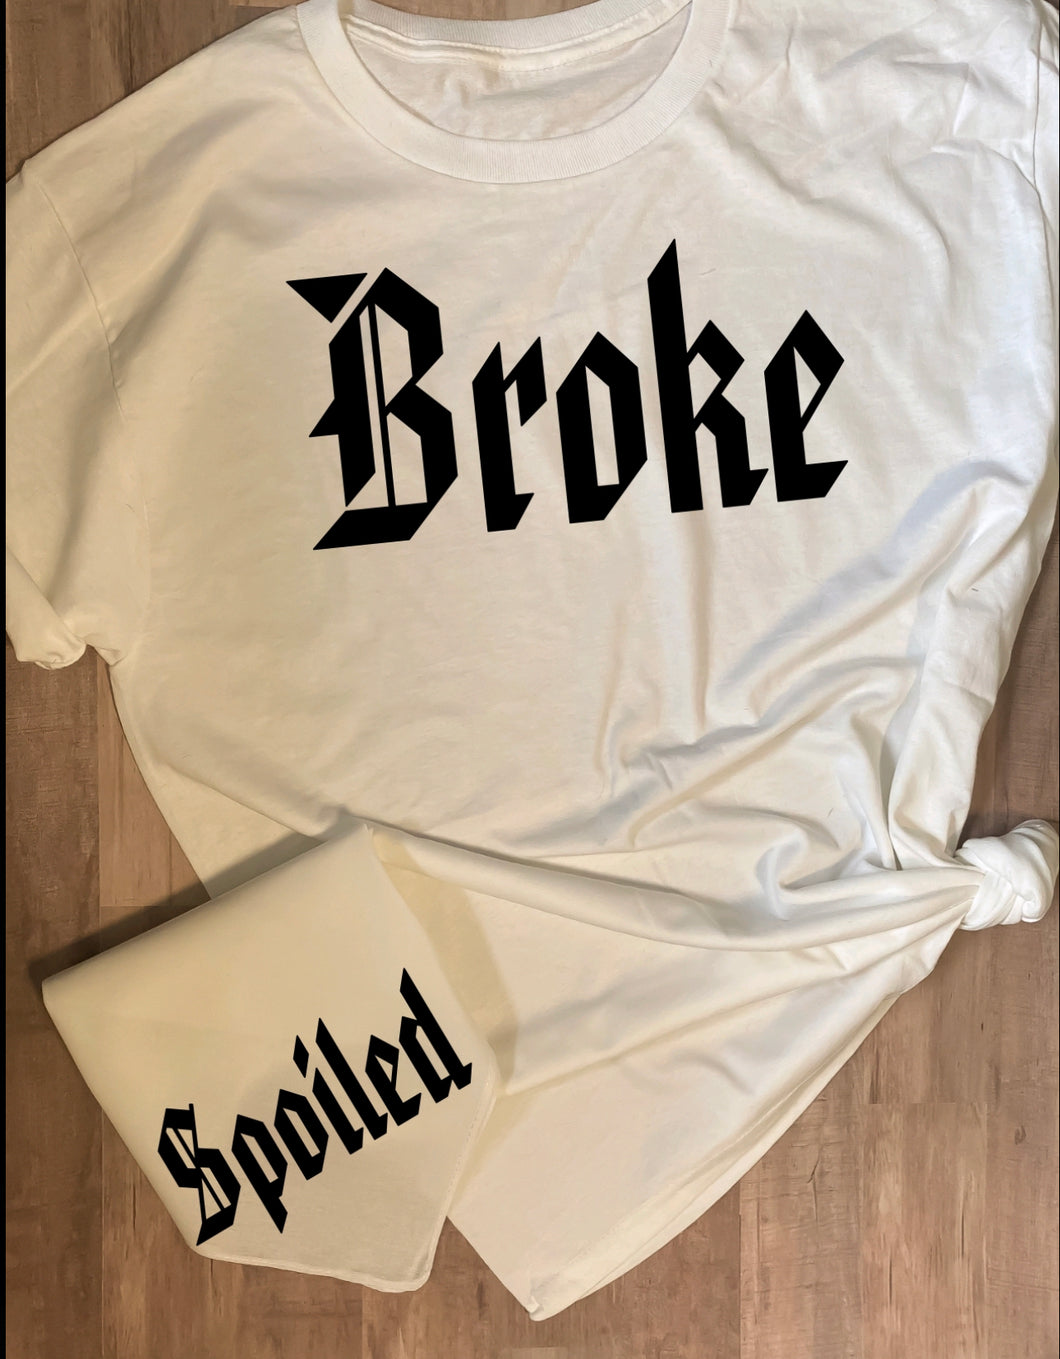 Broke-Spoiled T-Shirt/Bandana